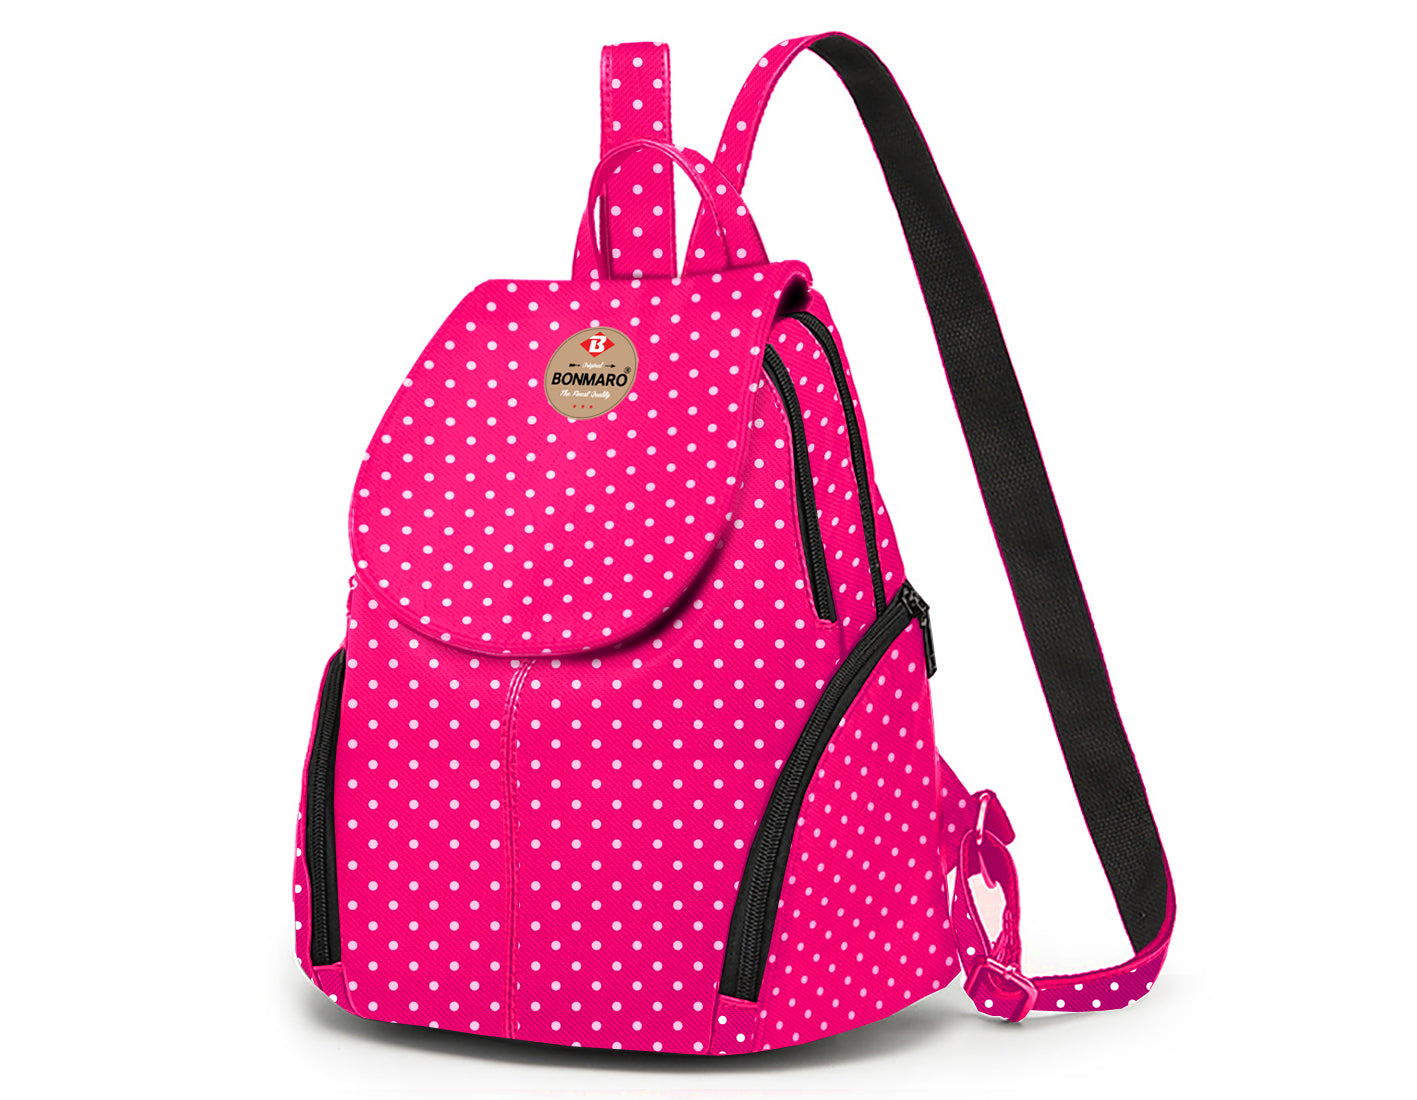 Buy BONMARO B Polka Dots Blue Teenage Girls Stylish Casual College Canvas  Laptop/Backpack Bag at Amazon.in